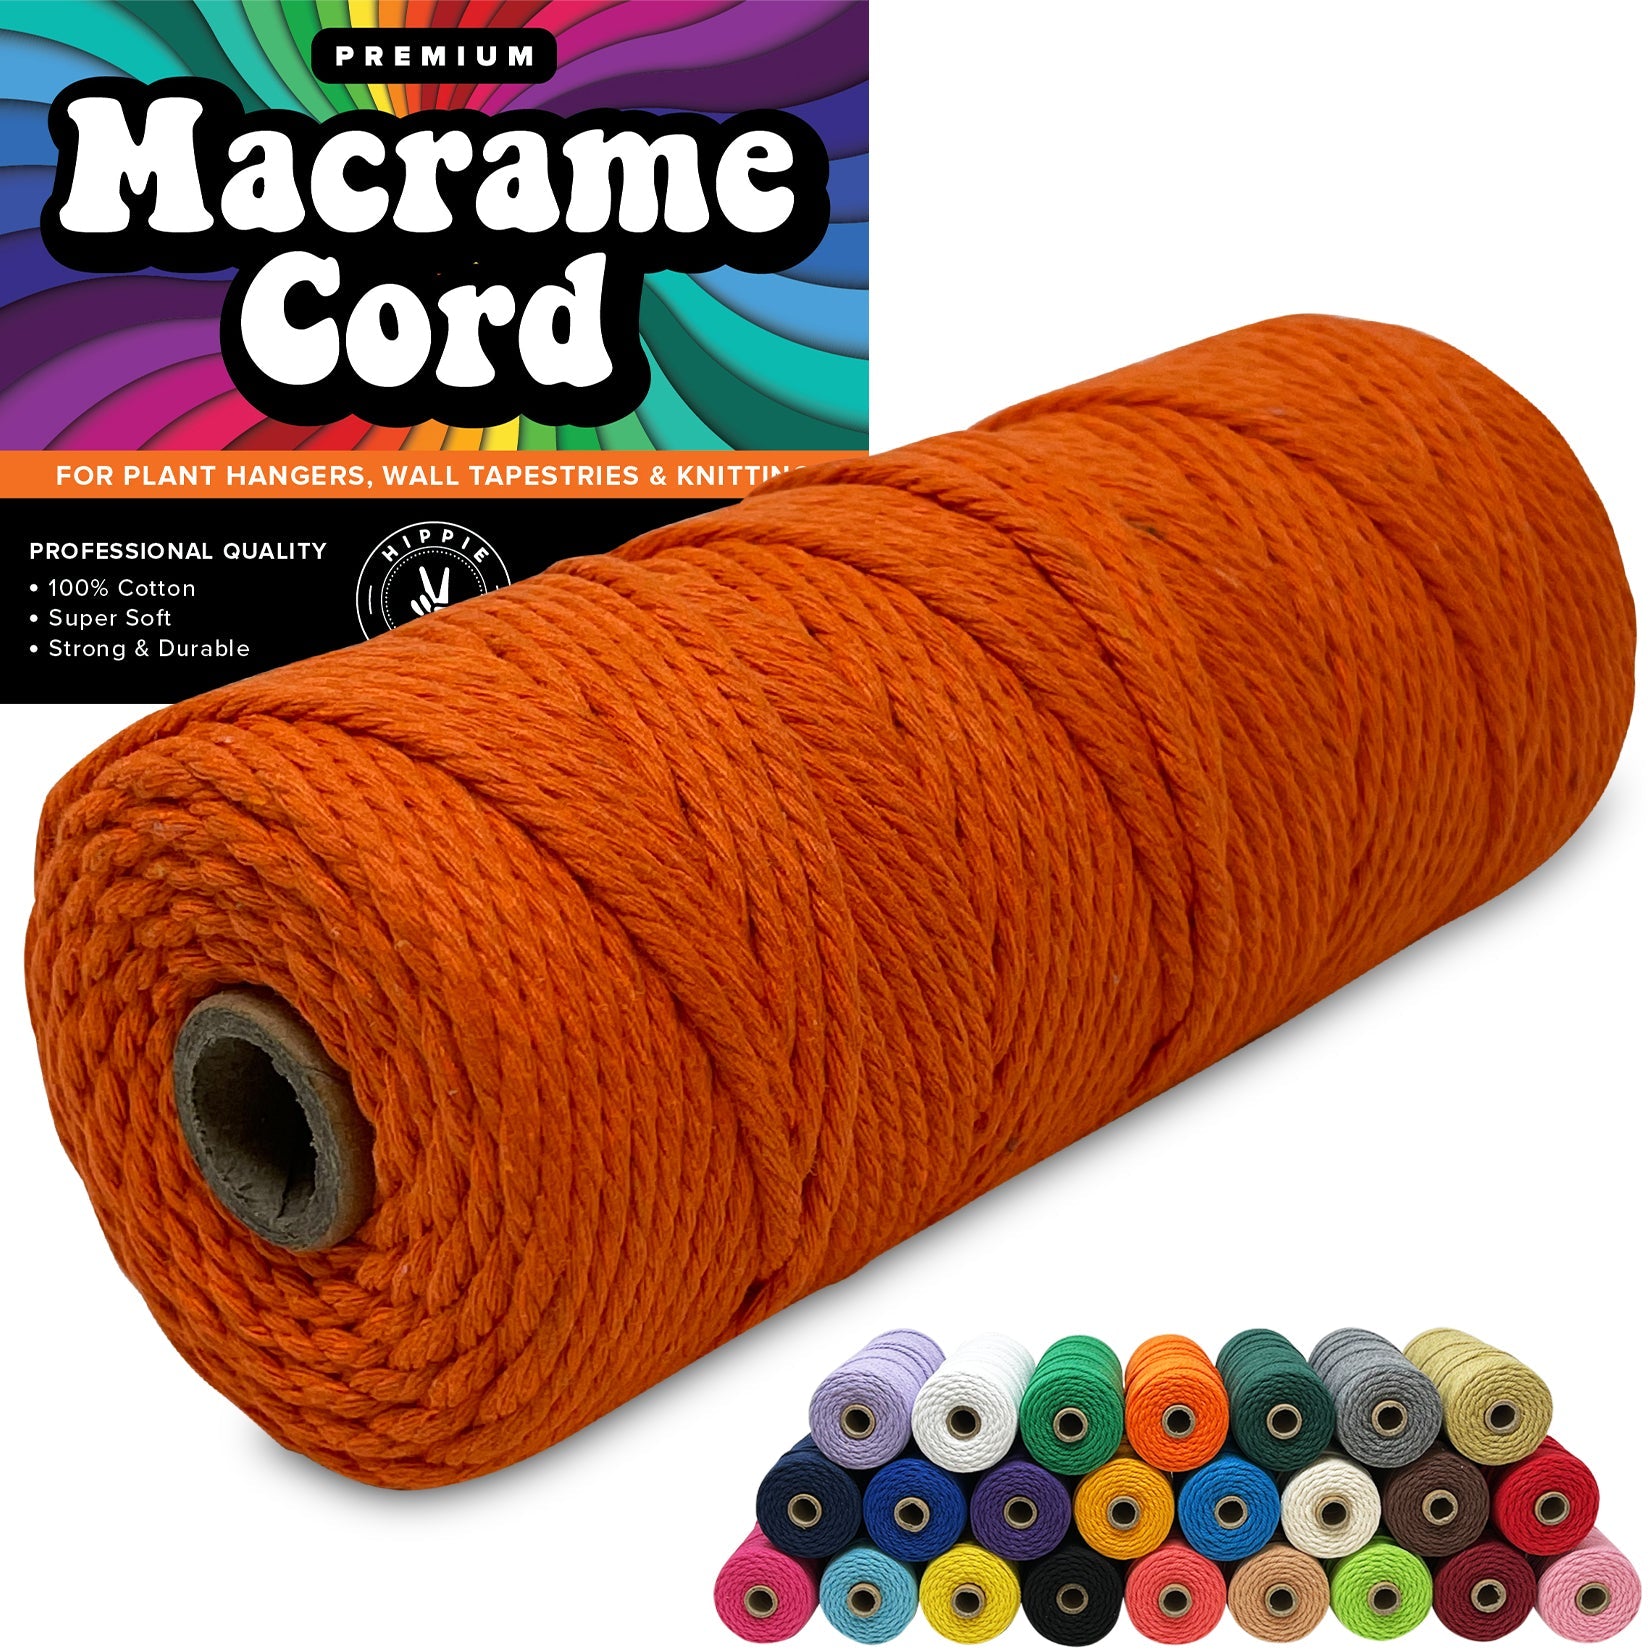 WD-Macrame Cord Cotton Twine